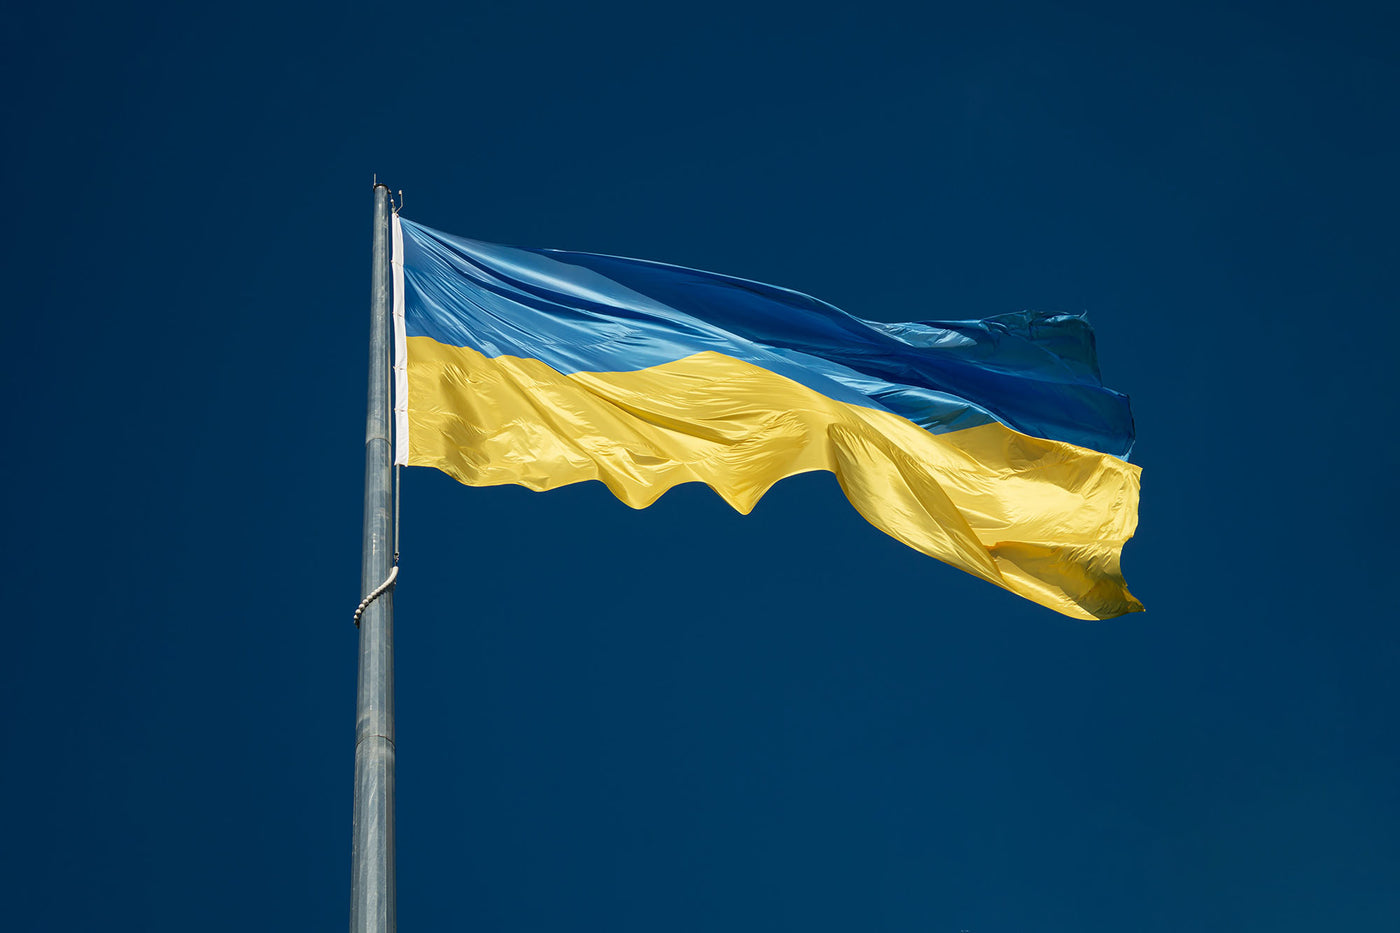 Unite For Ukraine - Help Us Raise £100,000